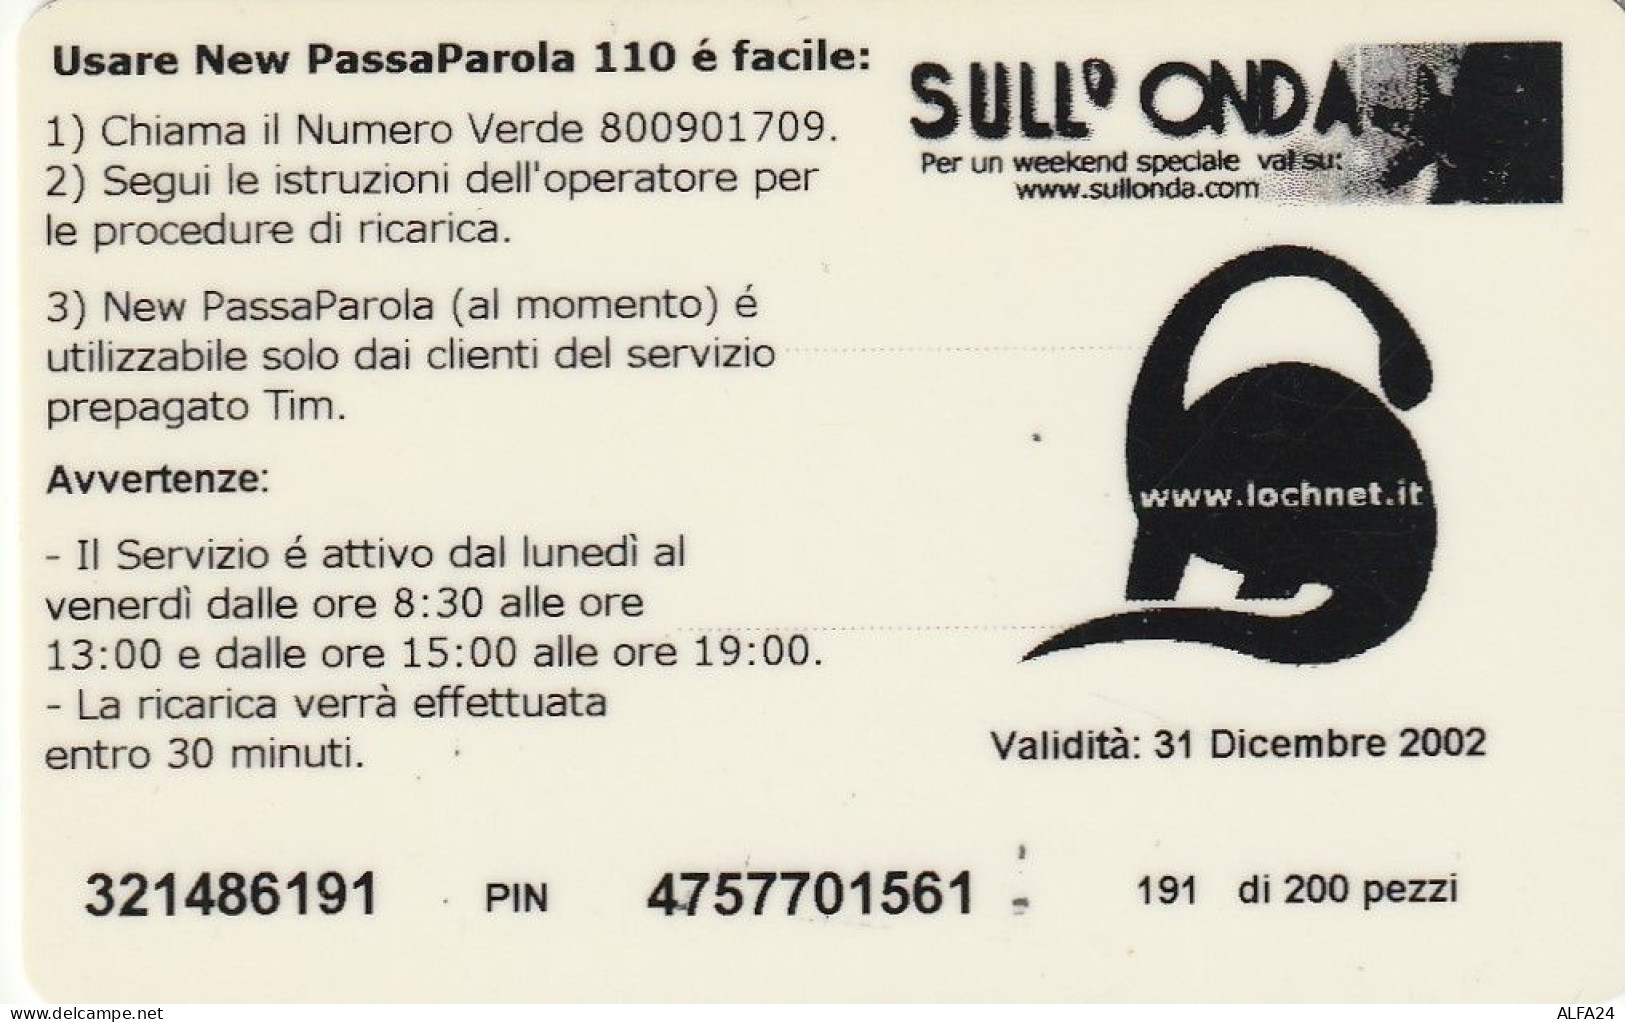 RICARICA TIM 110 CARNEVALE 2001  (USP41.7 - [2] Sim Cards, Prepaid & Refills